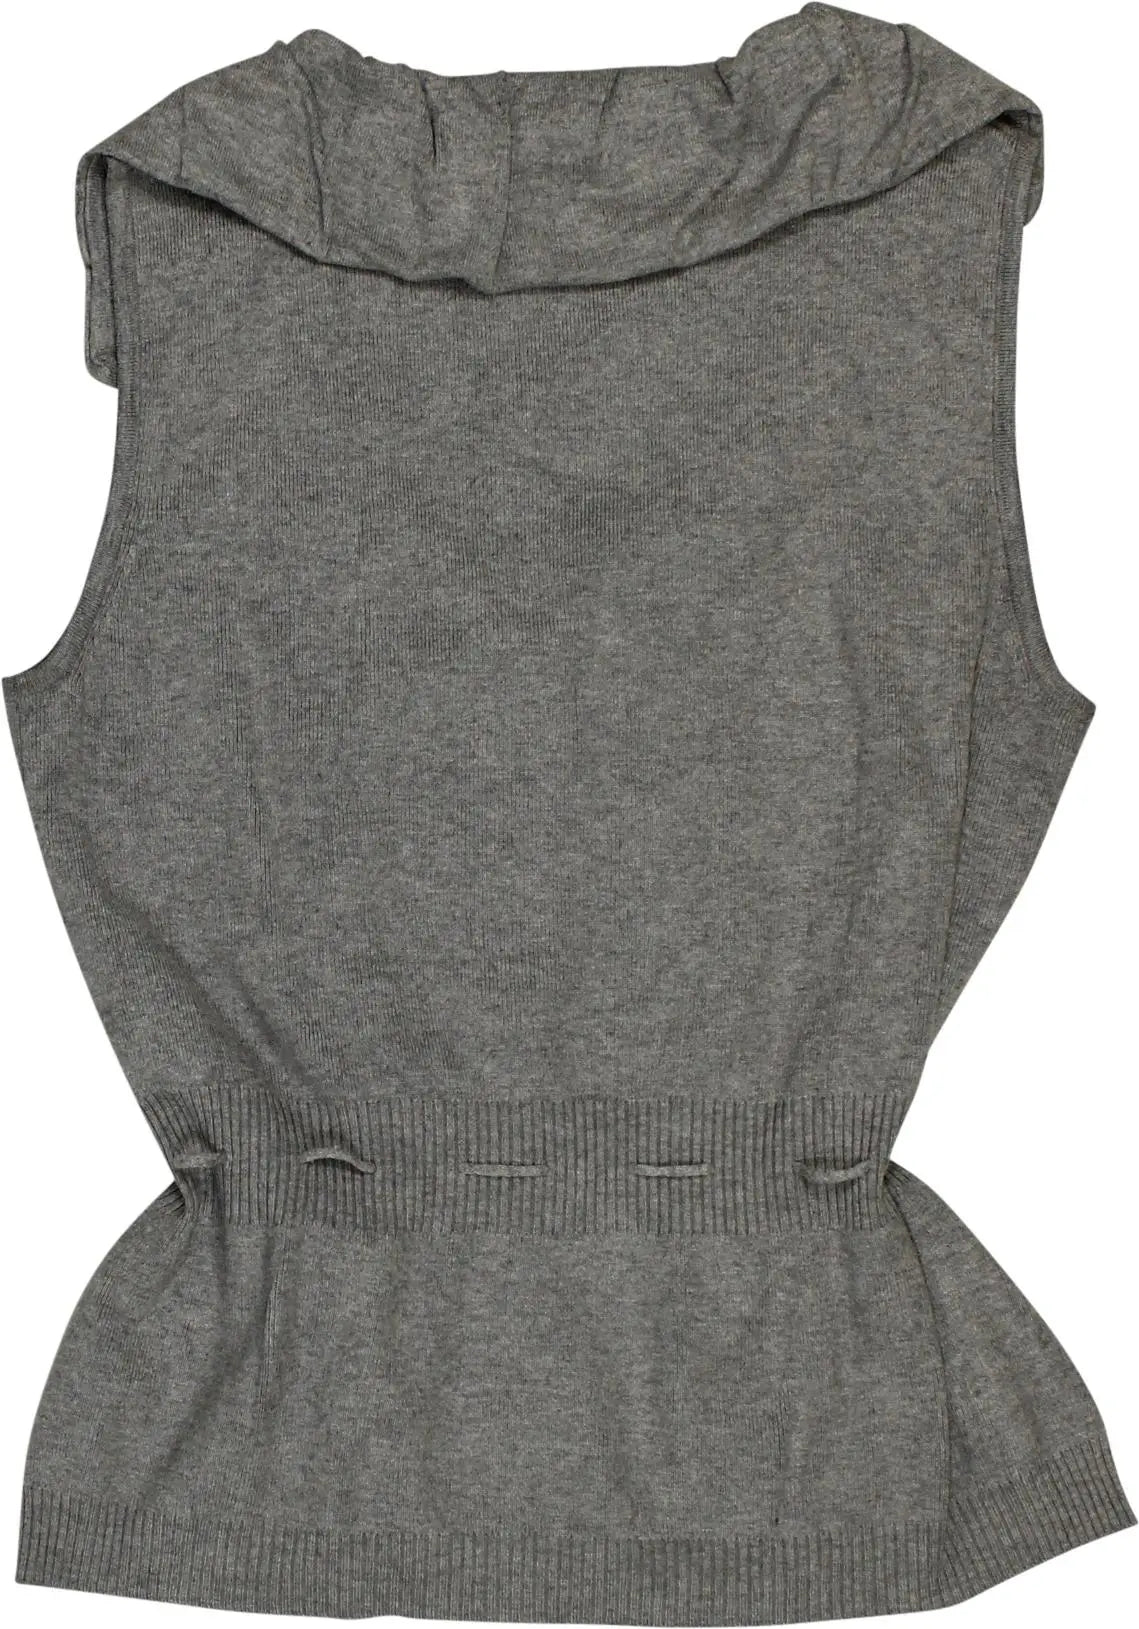 Enjoy - Vest- ThriftTale.com - Vintage and second handclothing